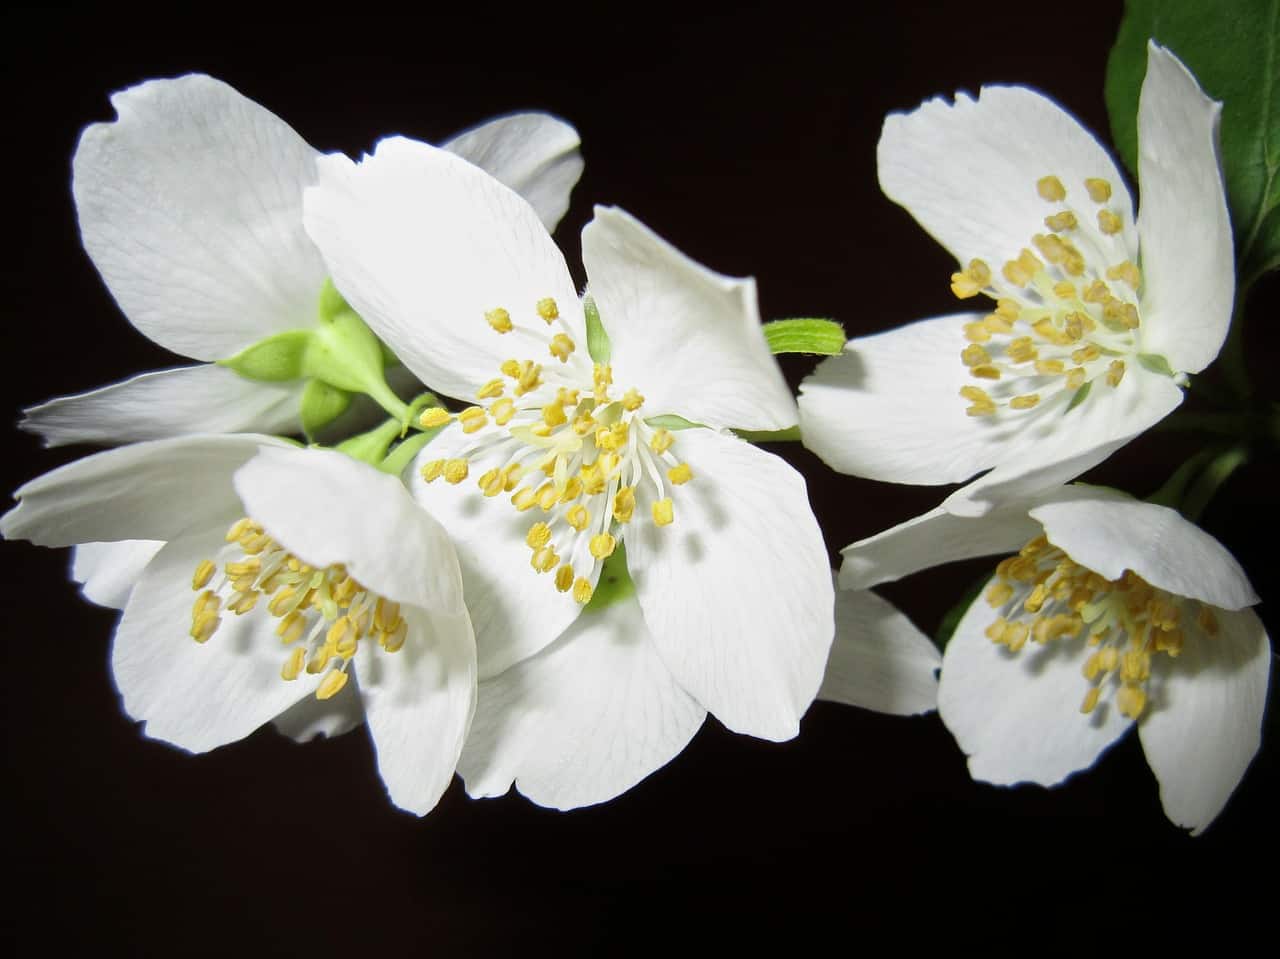 jasmine flower images